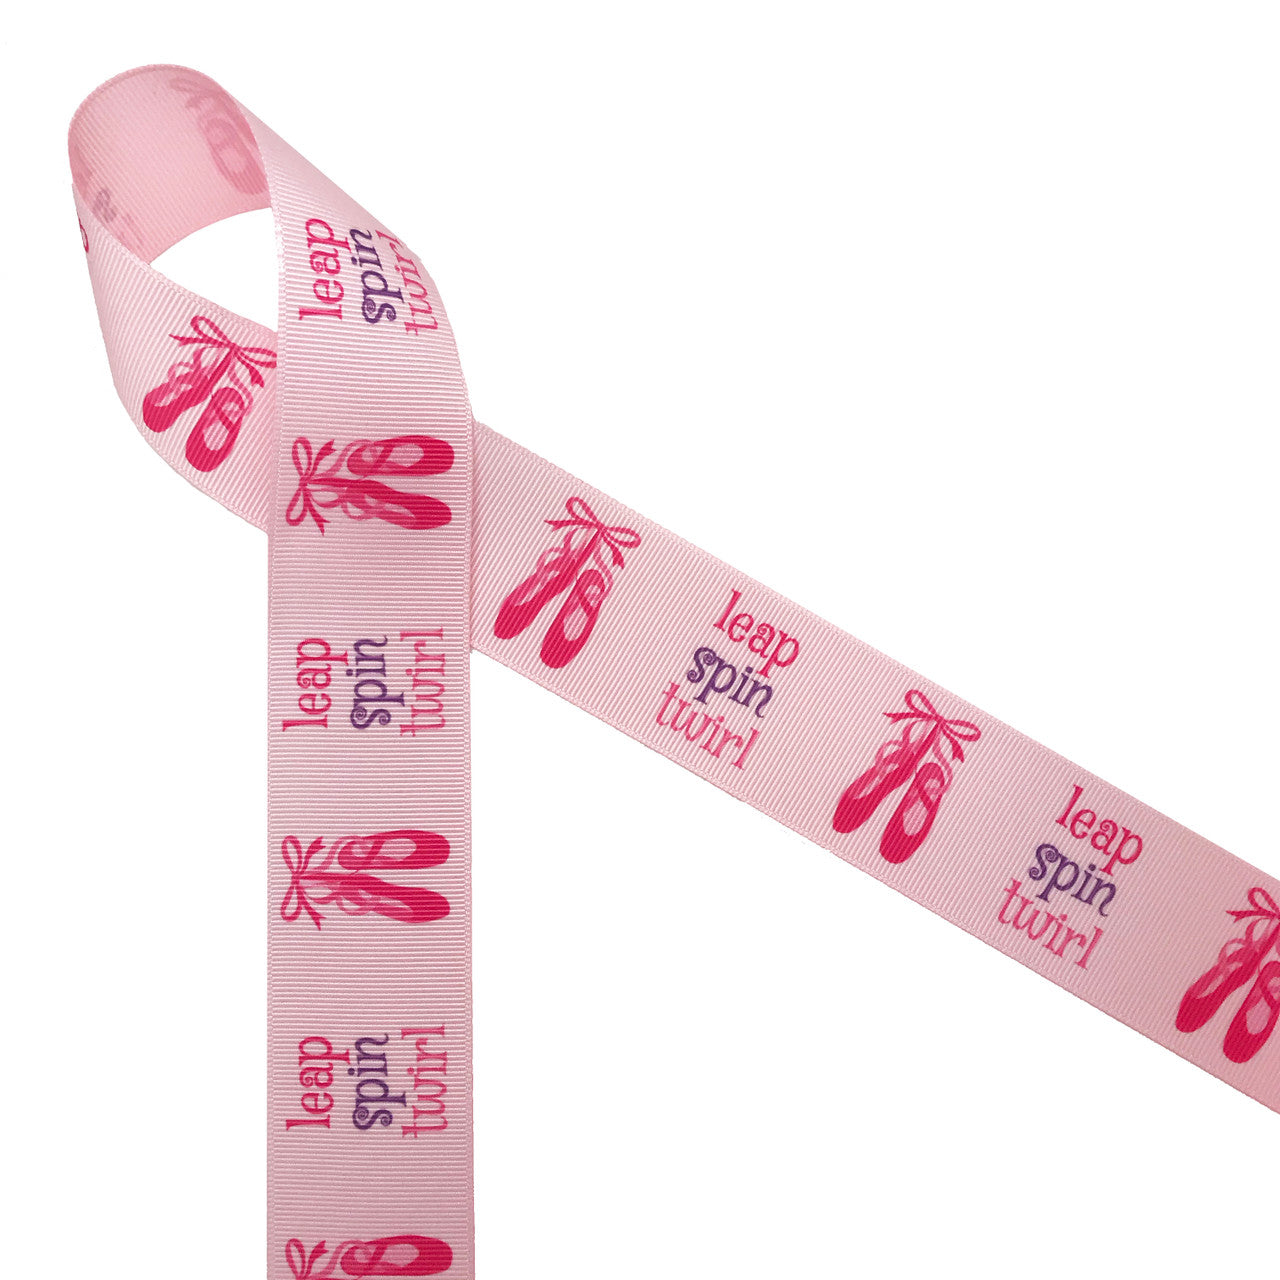 Ballet Ribbon printed on 1.5" light pink grosgrain ribbon